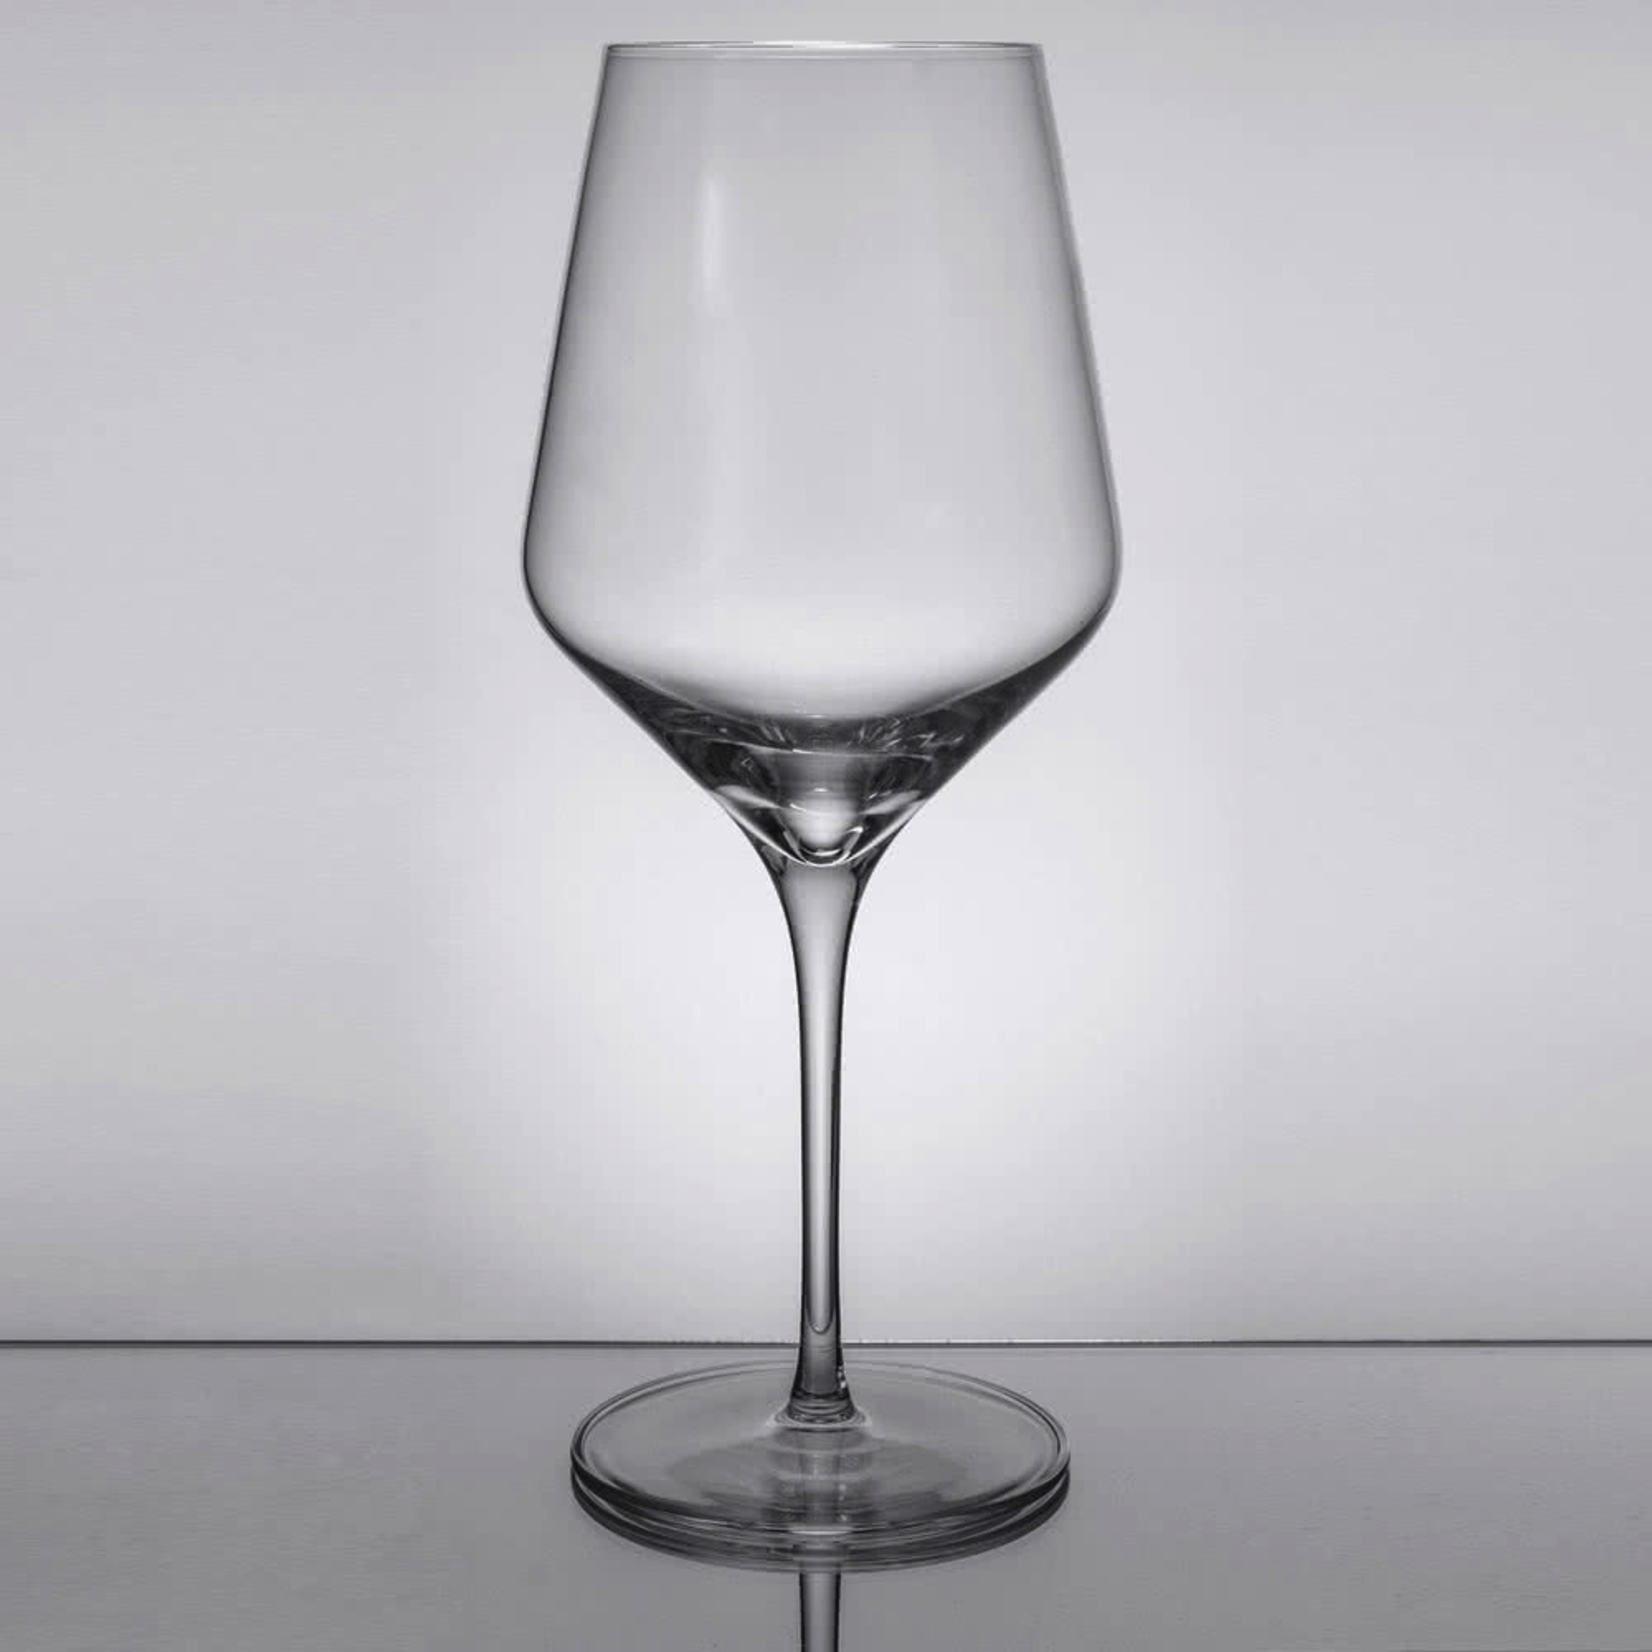 LIBBEY 9324 Libbey 20 oz Prism Wine clear glass 12/cs